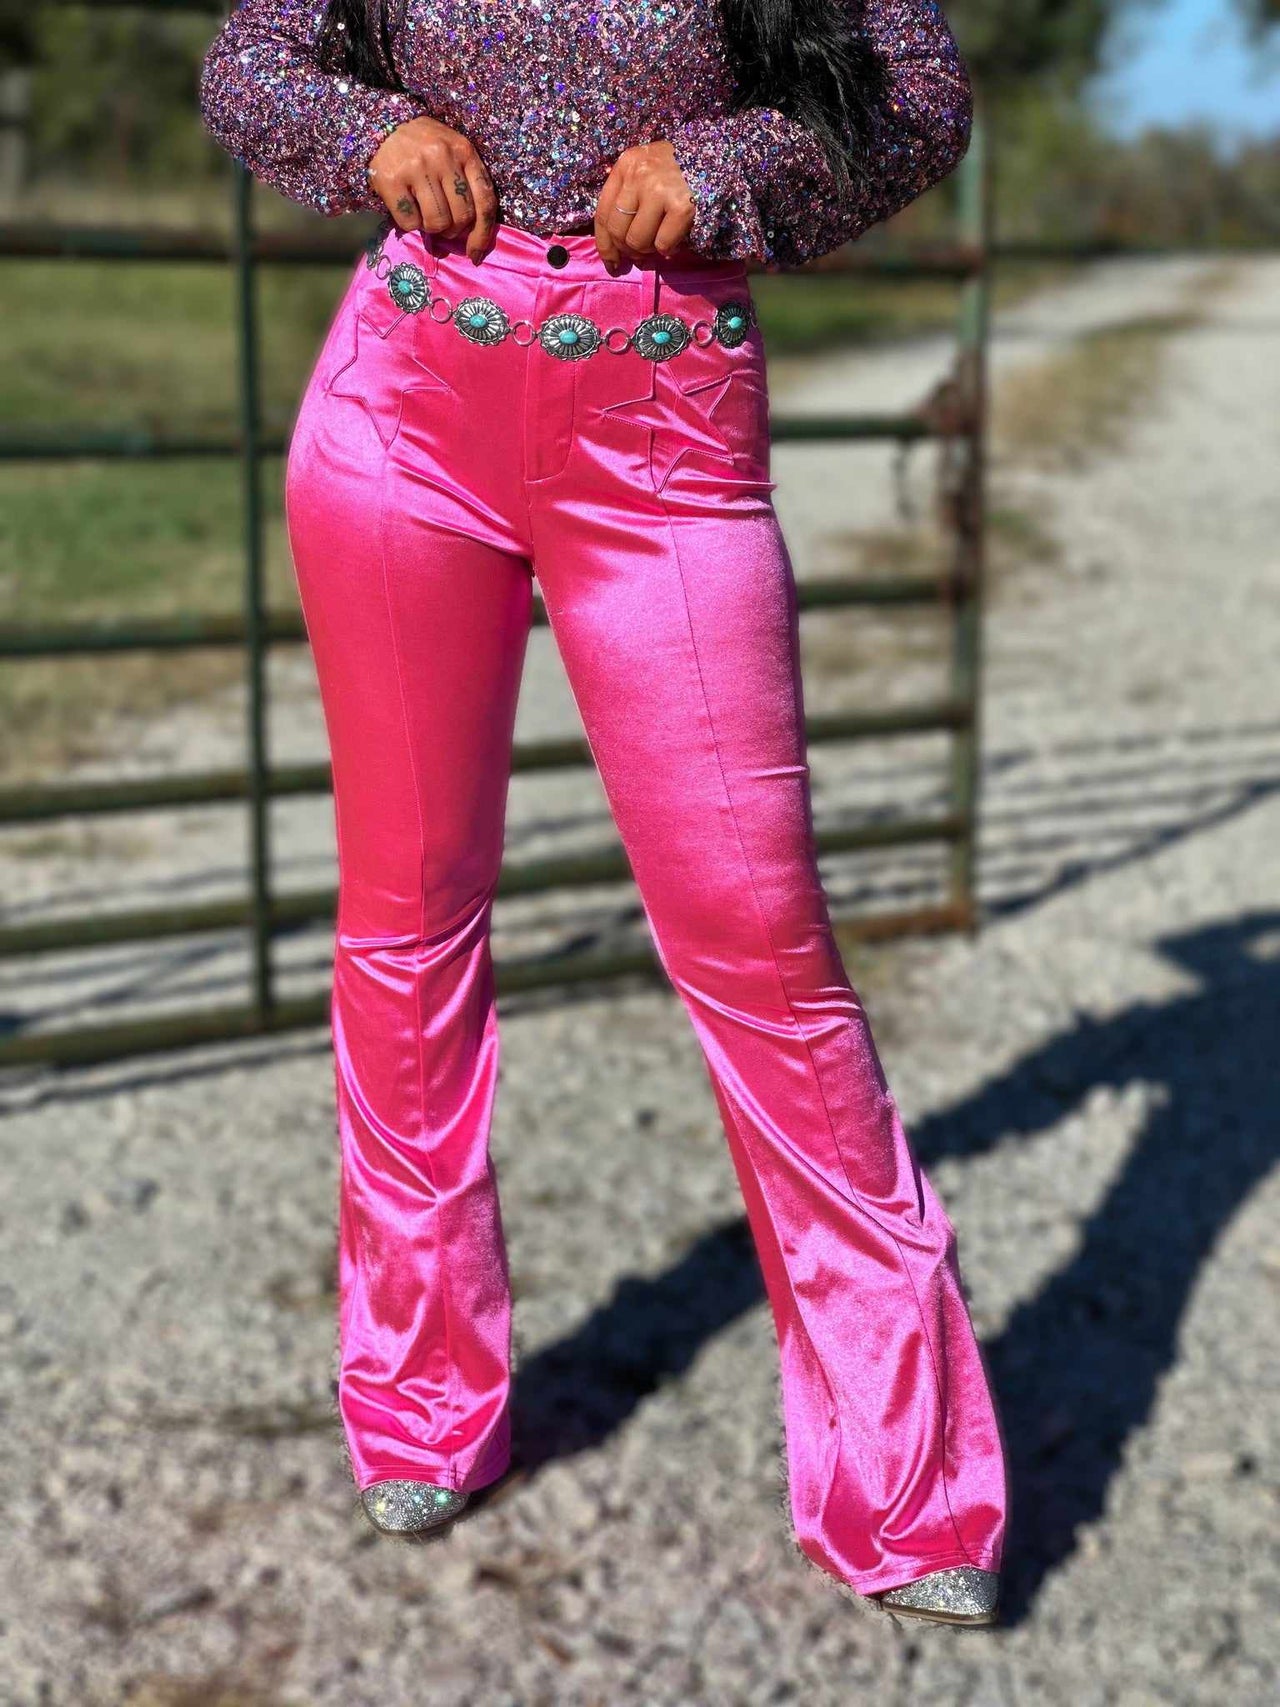 Naja Diamond: Savoring Summer in ma Hot Pink pants!! | Hot pink pants, Pink  pants outfit, Pink pants